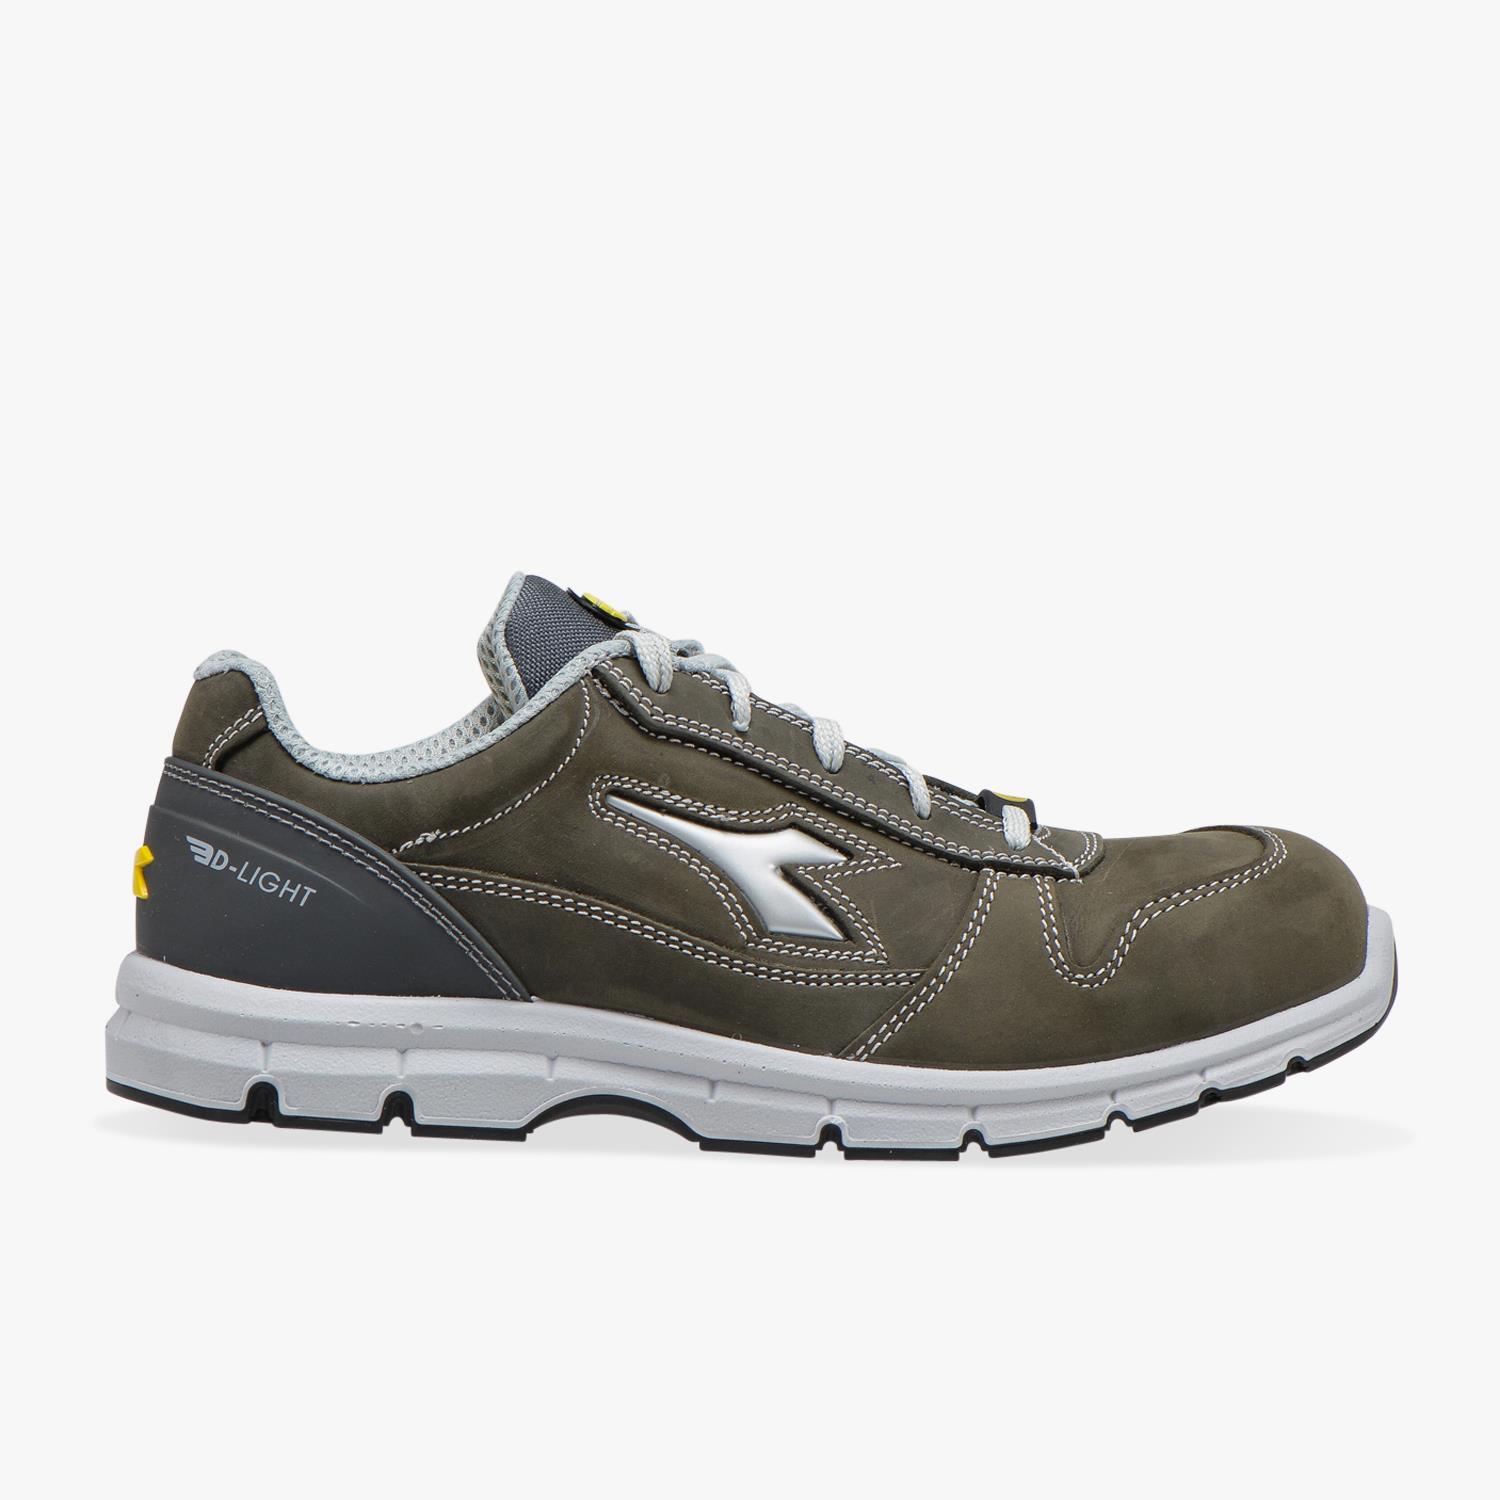 Footwear diadora utility model run s3